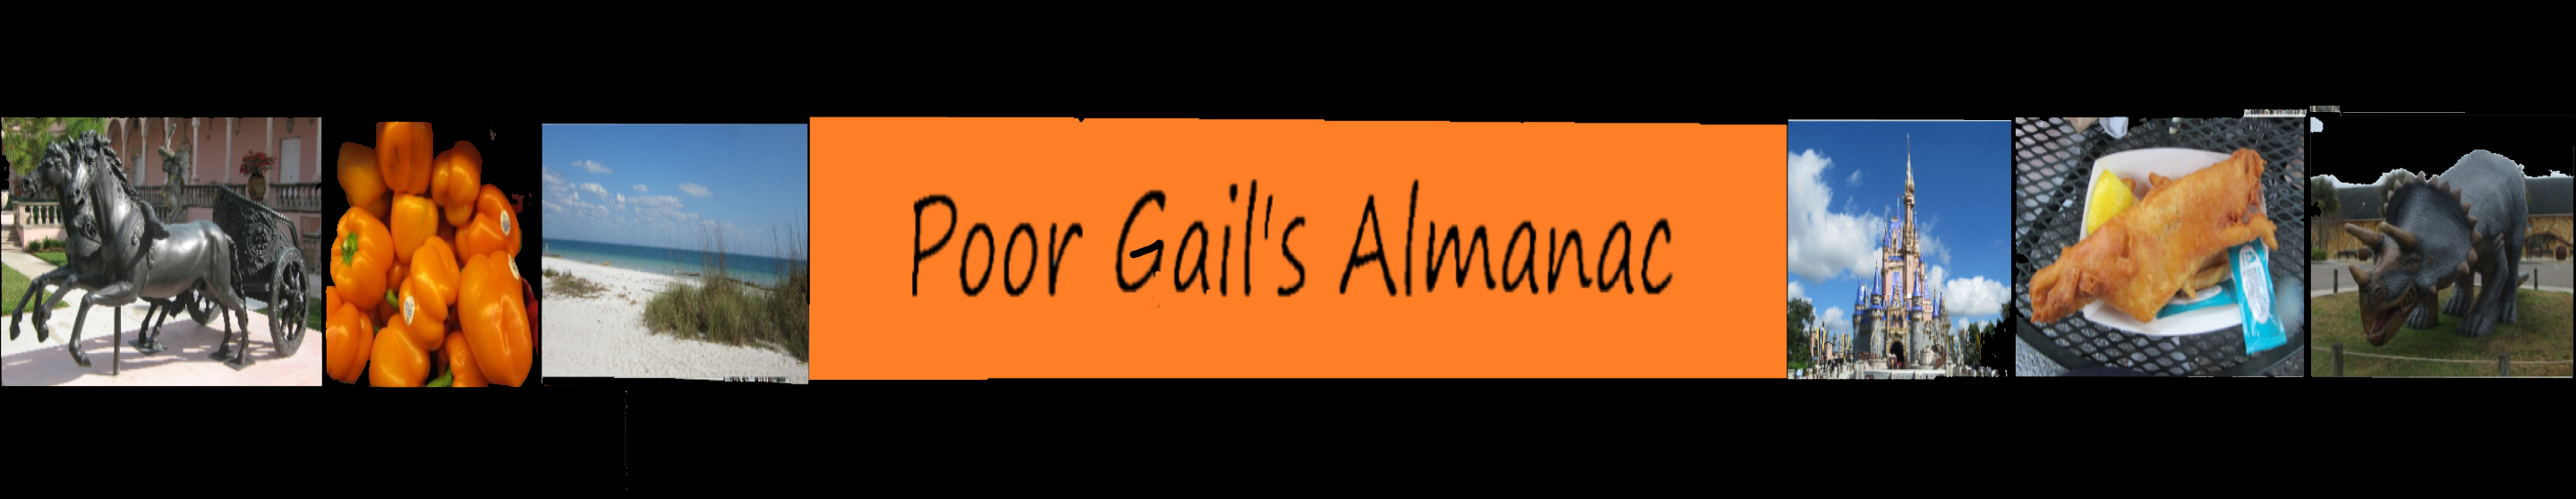 Poor Gail's Almanac